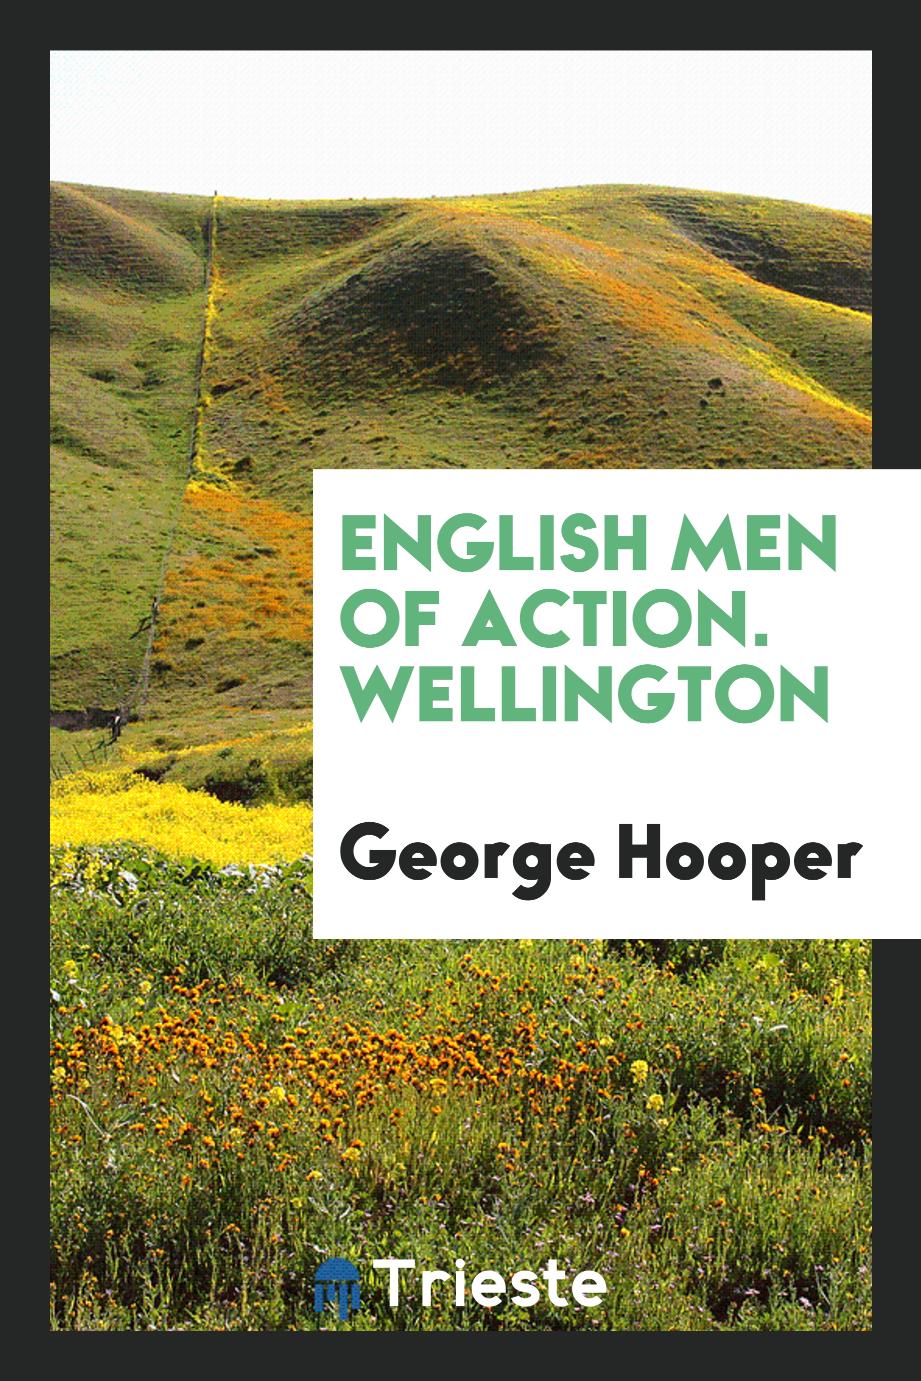 English men of action. Wellington